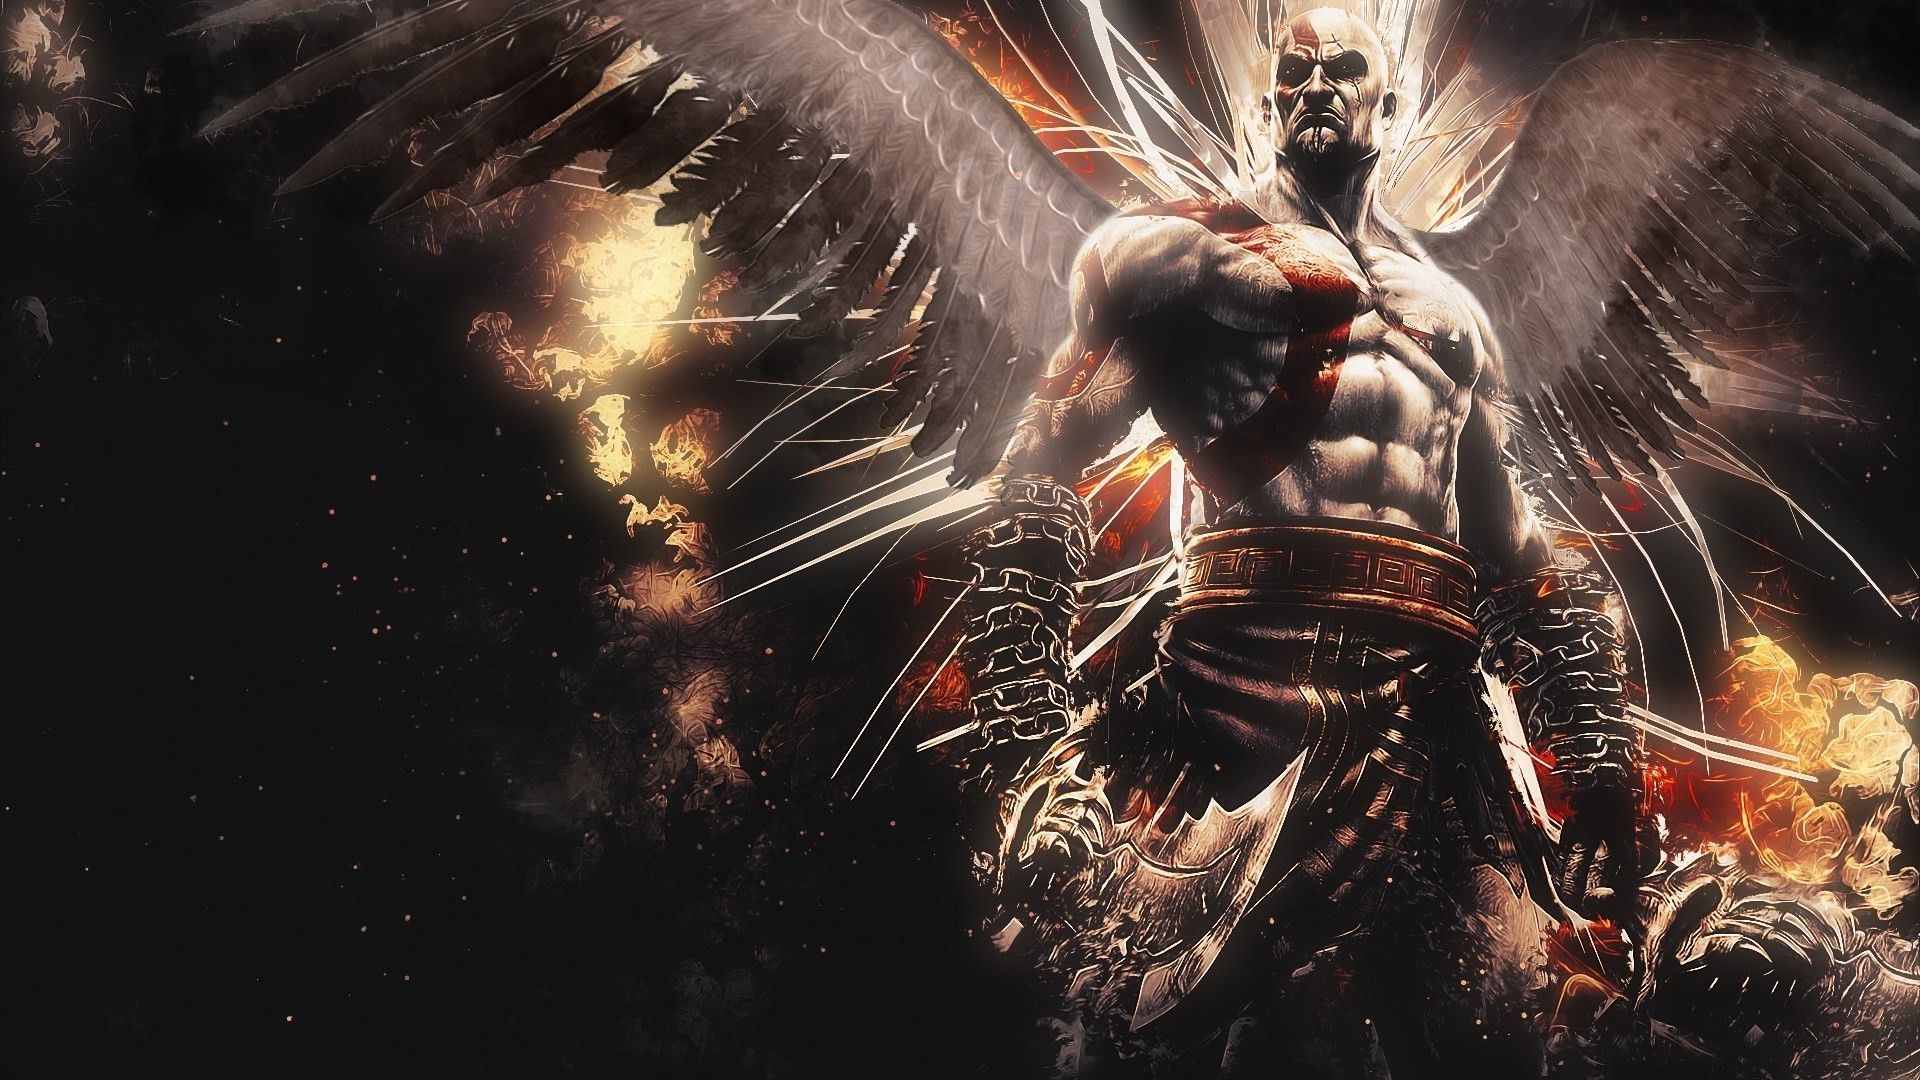 god of war wallpaper hd,action adventure game,demon,cg artwork,darkness,mythology